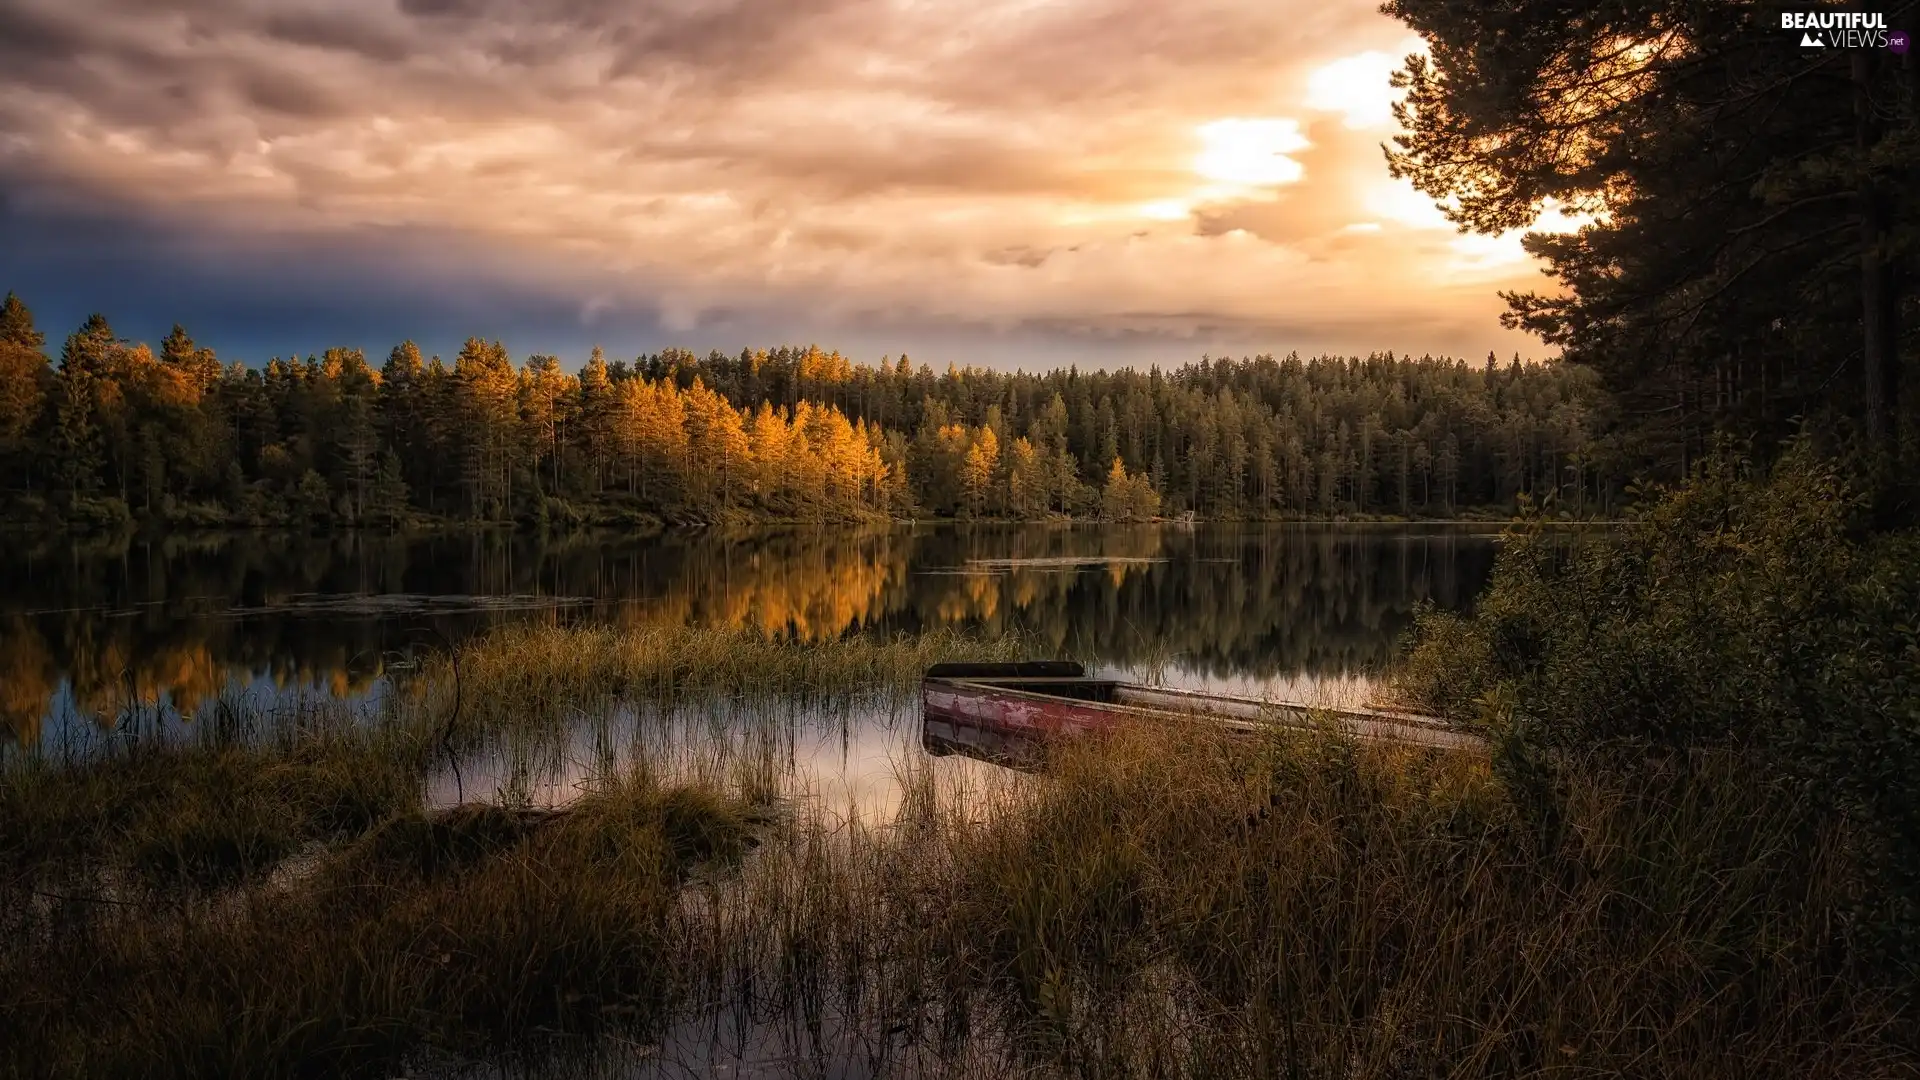 scrub, Boat, lake, forest, autumn